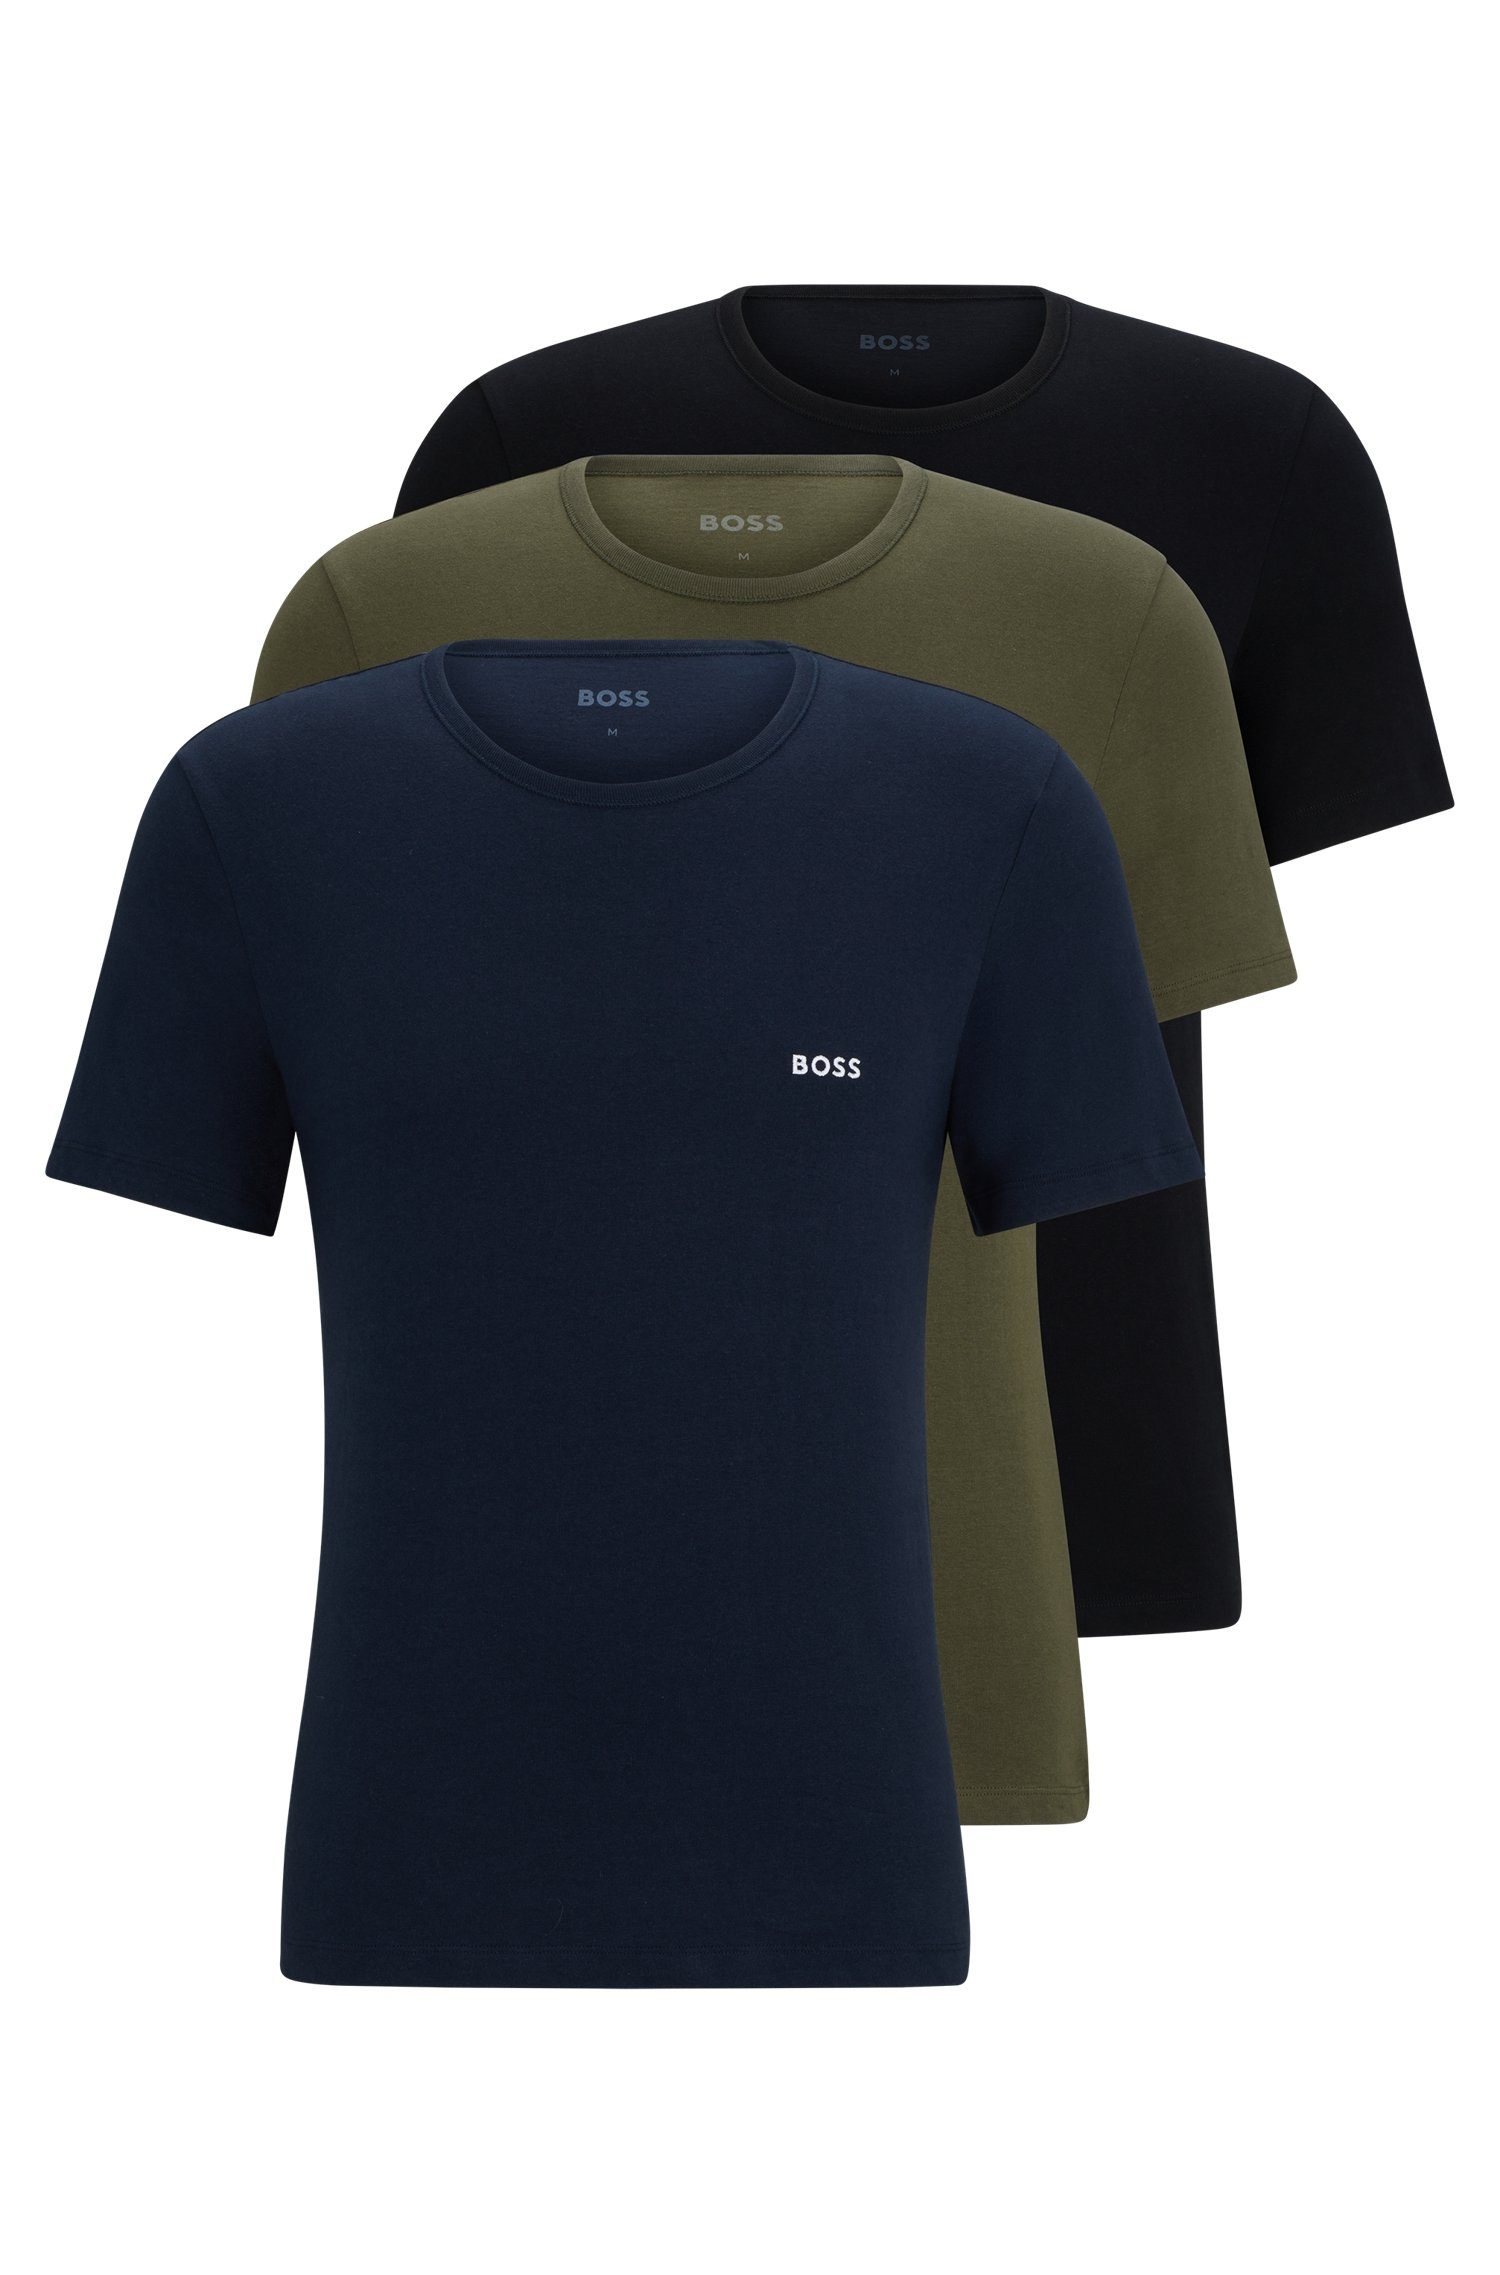 BOSS T-Shirt (Set, 3-tlg) mit BOSS Schriftzug auf der Brust schwarz/dunkelblau/khaki980